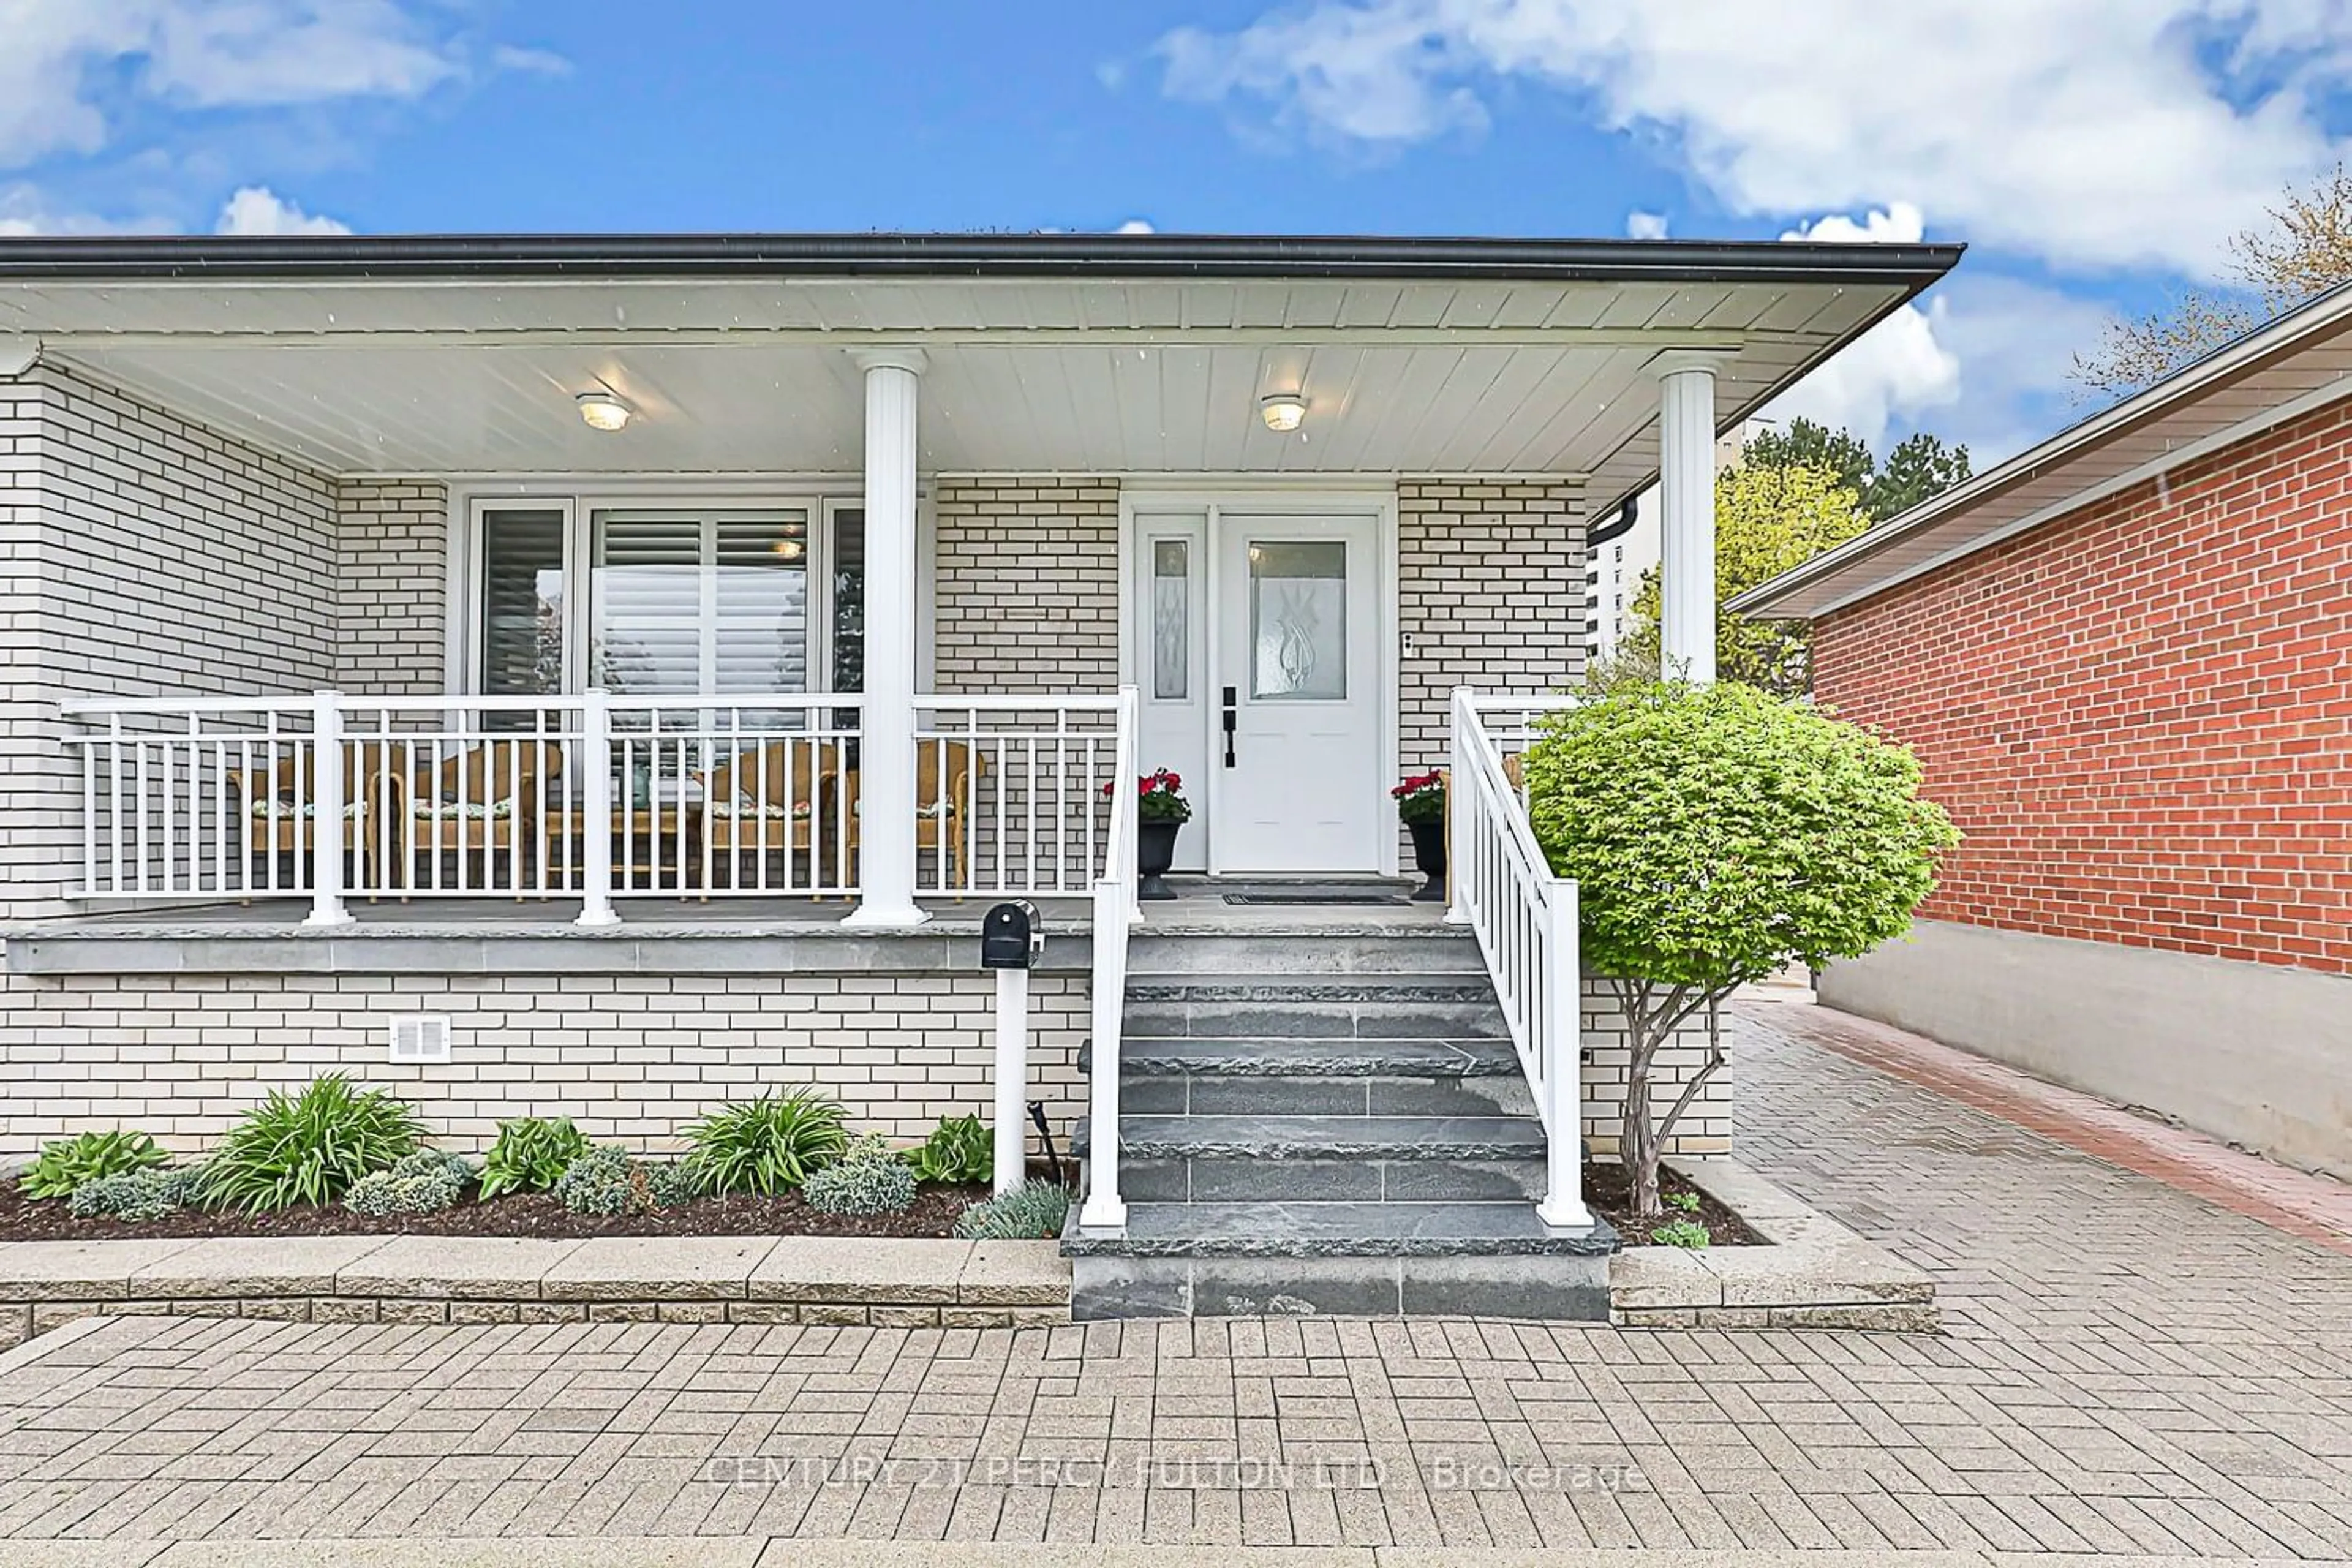 Home with brick exterior material for 72 Orangewood Cres, Toronto Ontario M1W 1C7